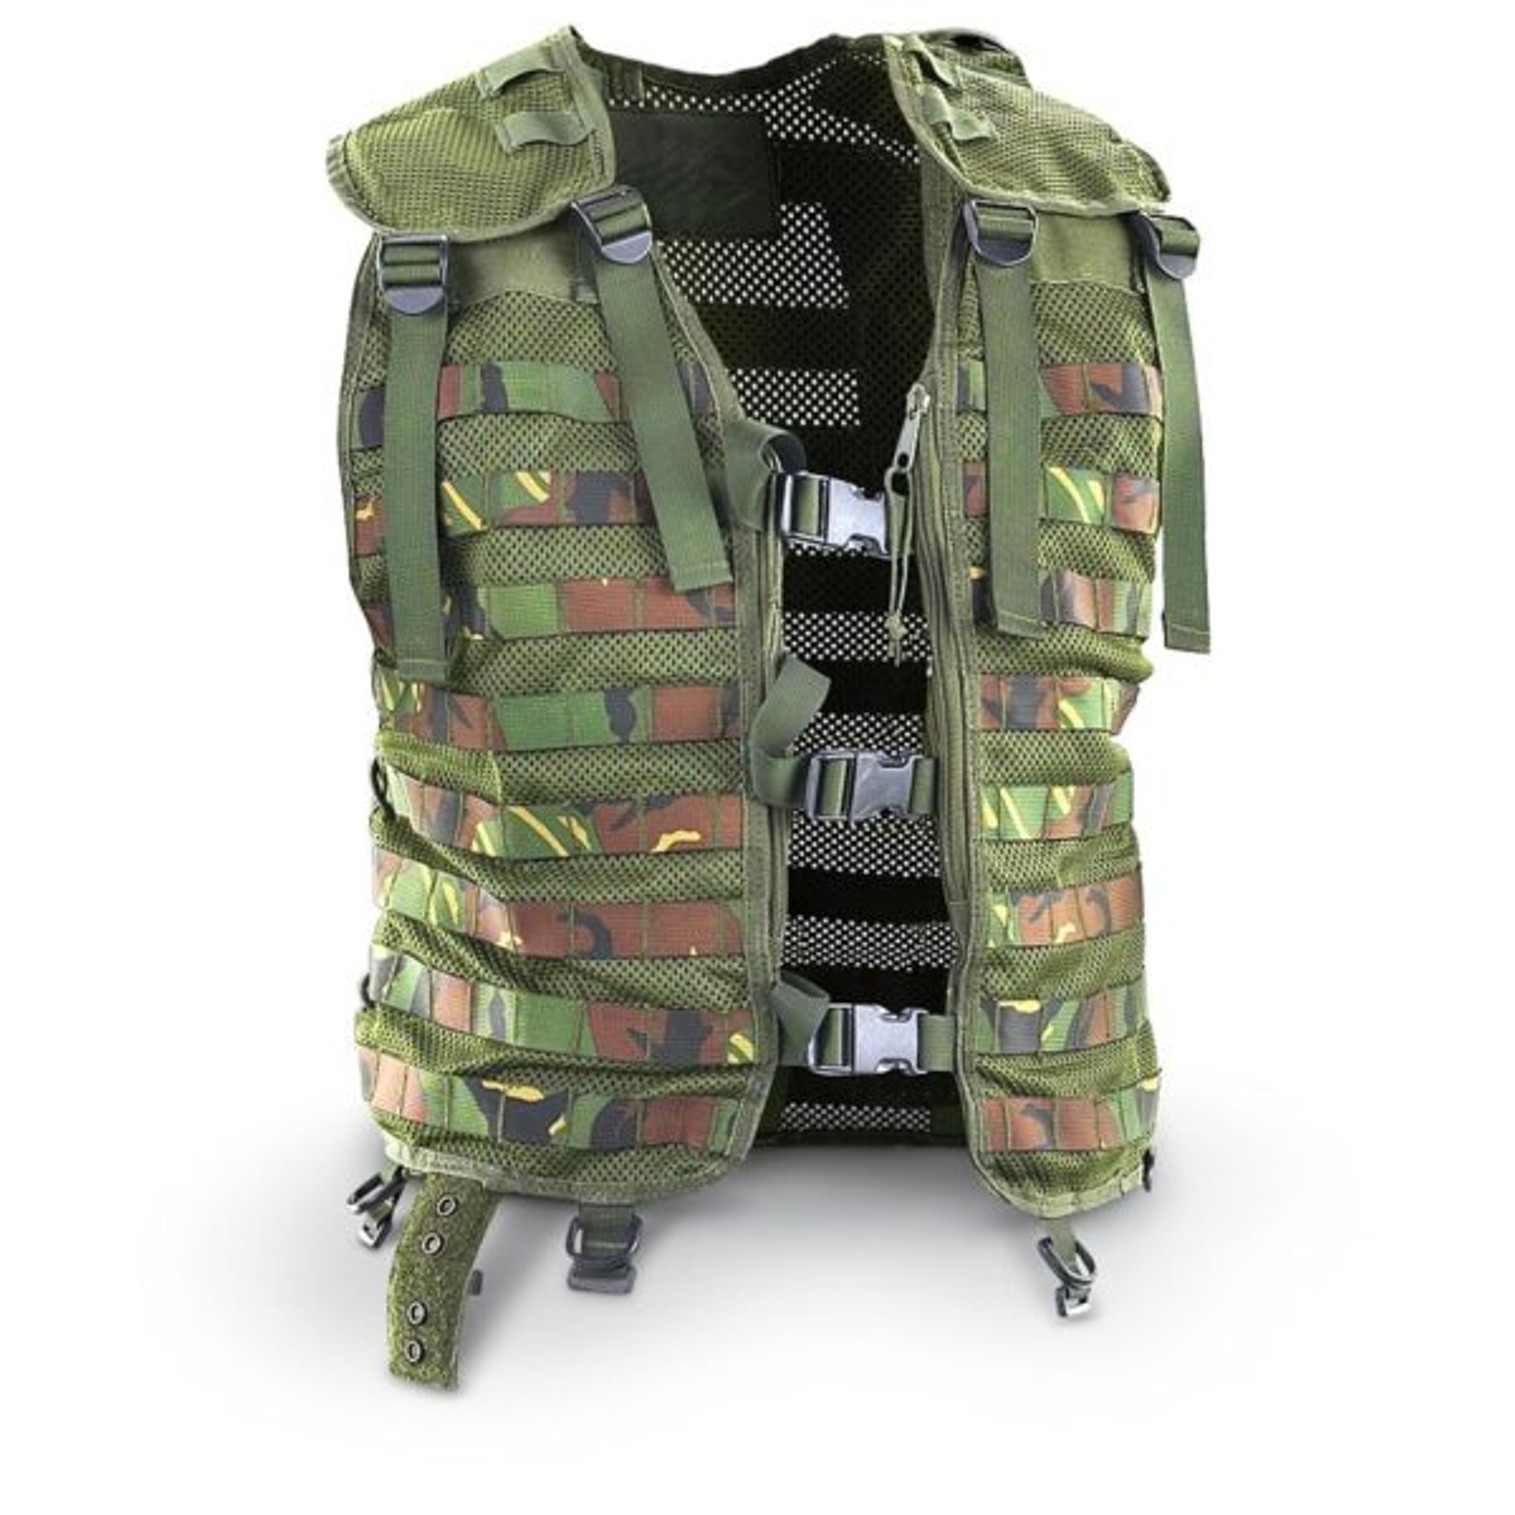 Dutch Armed Forces Modular Vest 